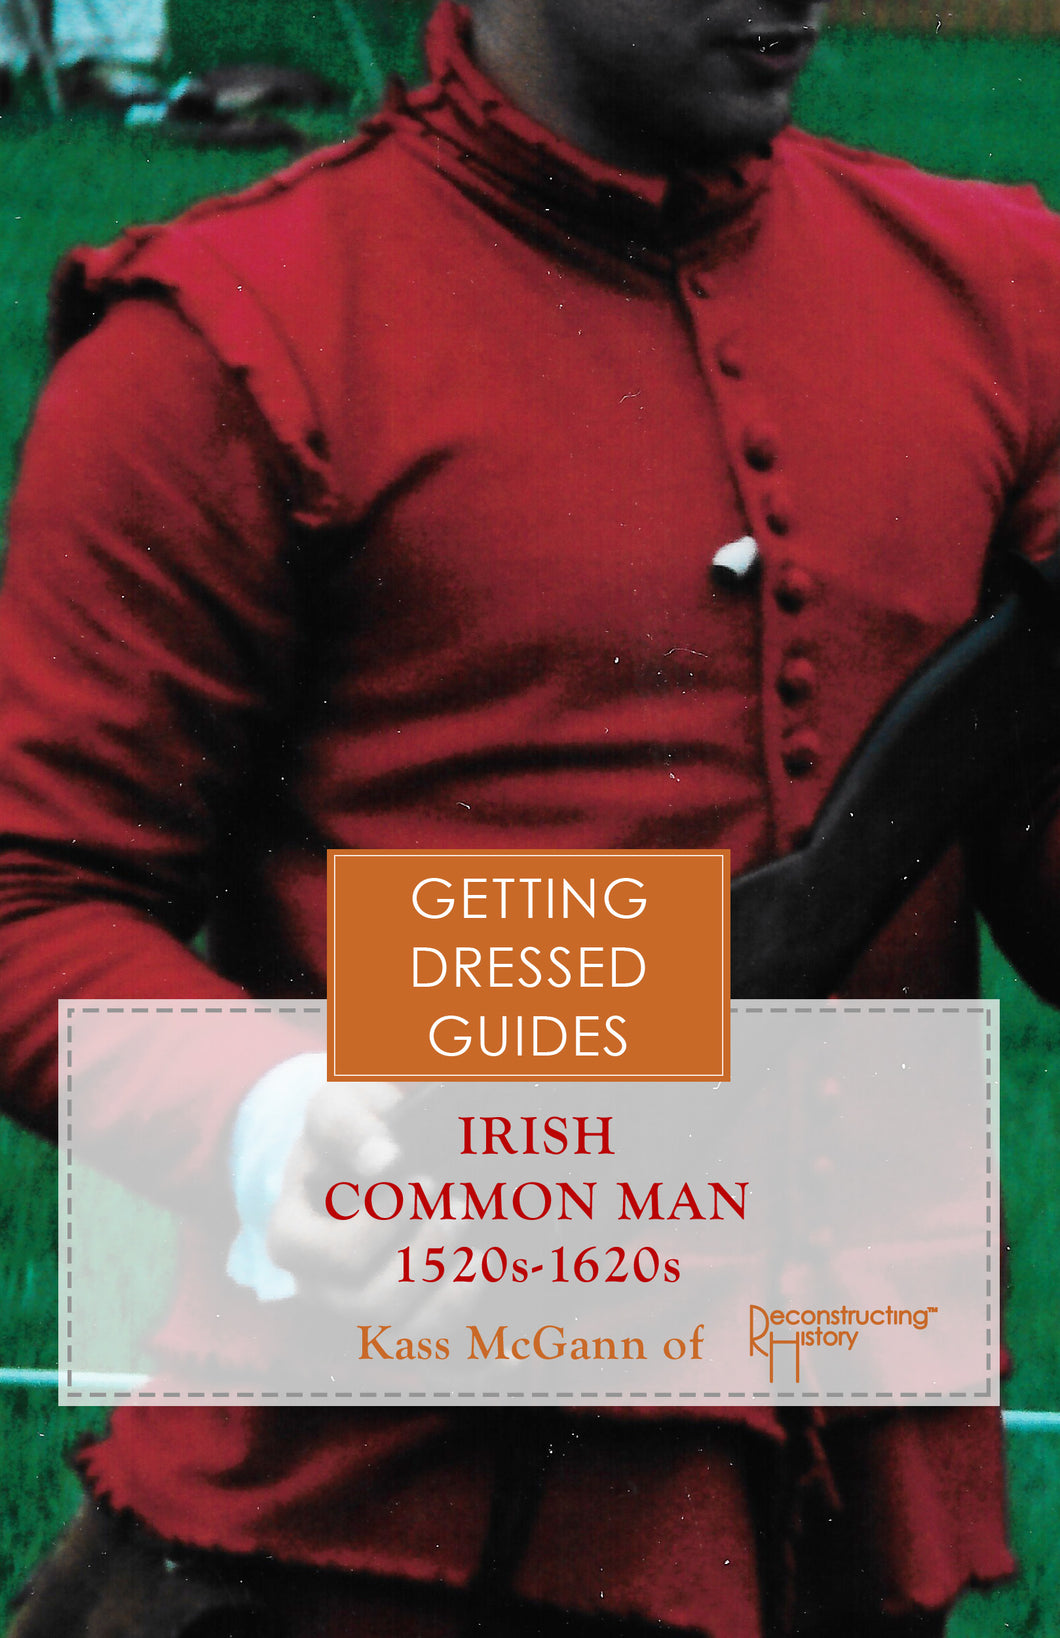 16th century Irish Men's Getting Dressed Guide